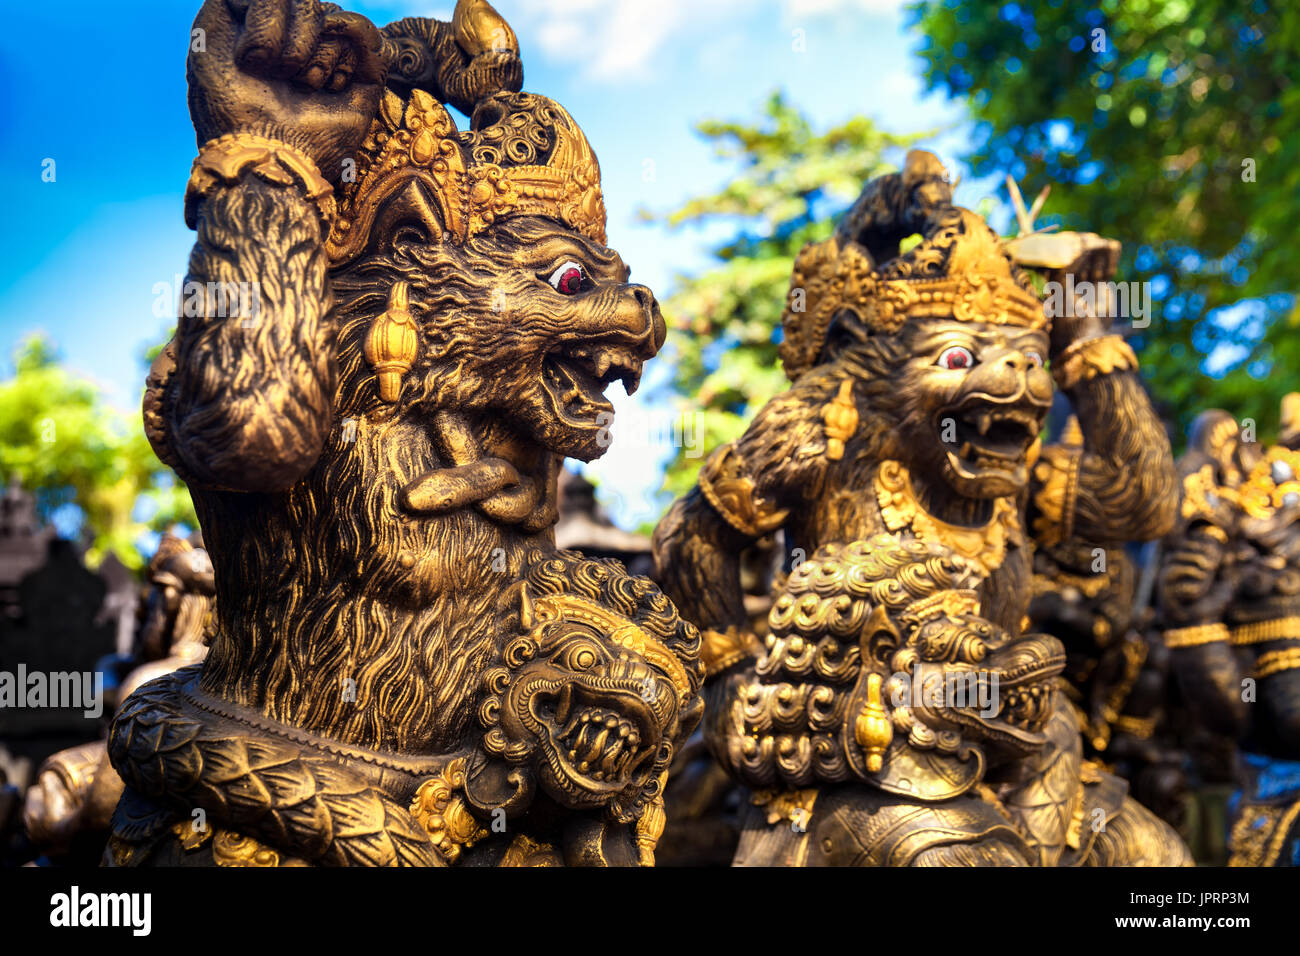 Gardian statue at entrance Bali temple / Bali Hindu temple / Bali, Indonesia Stock Photo